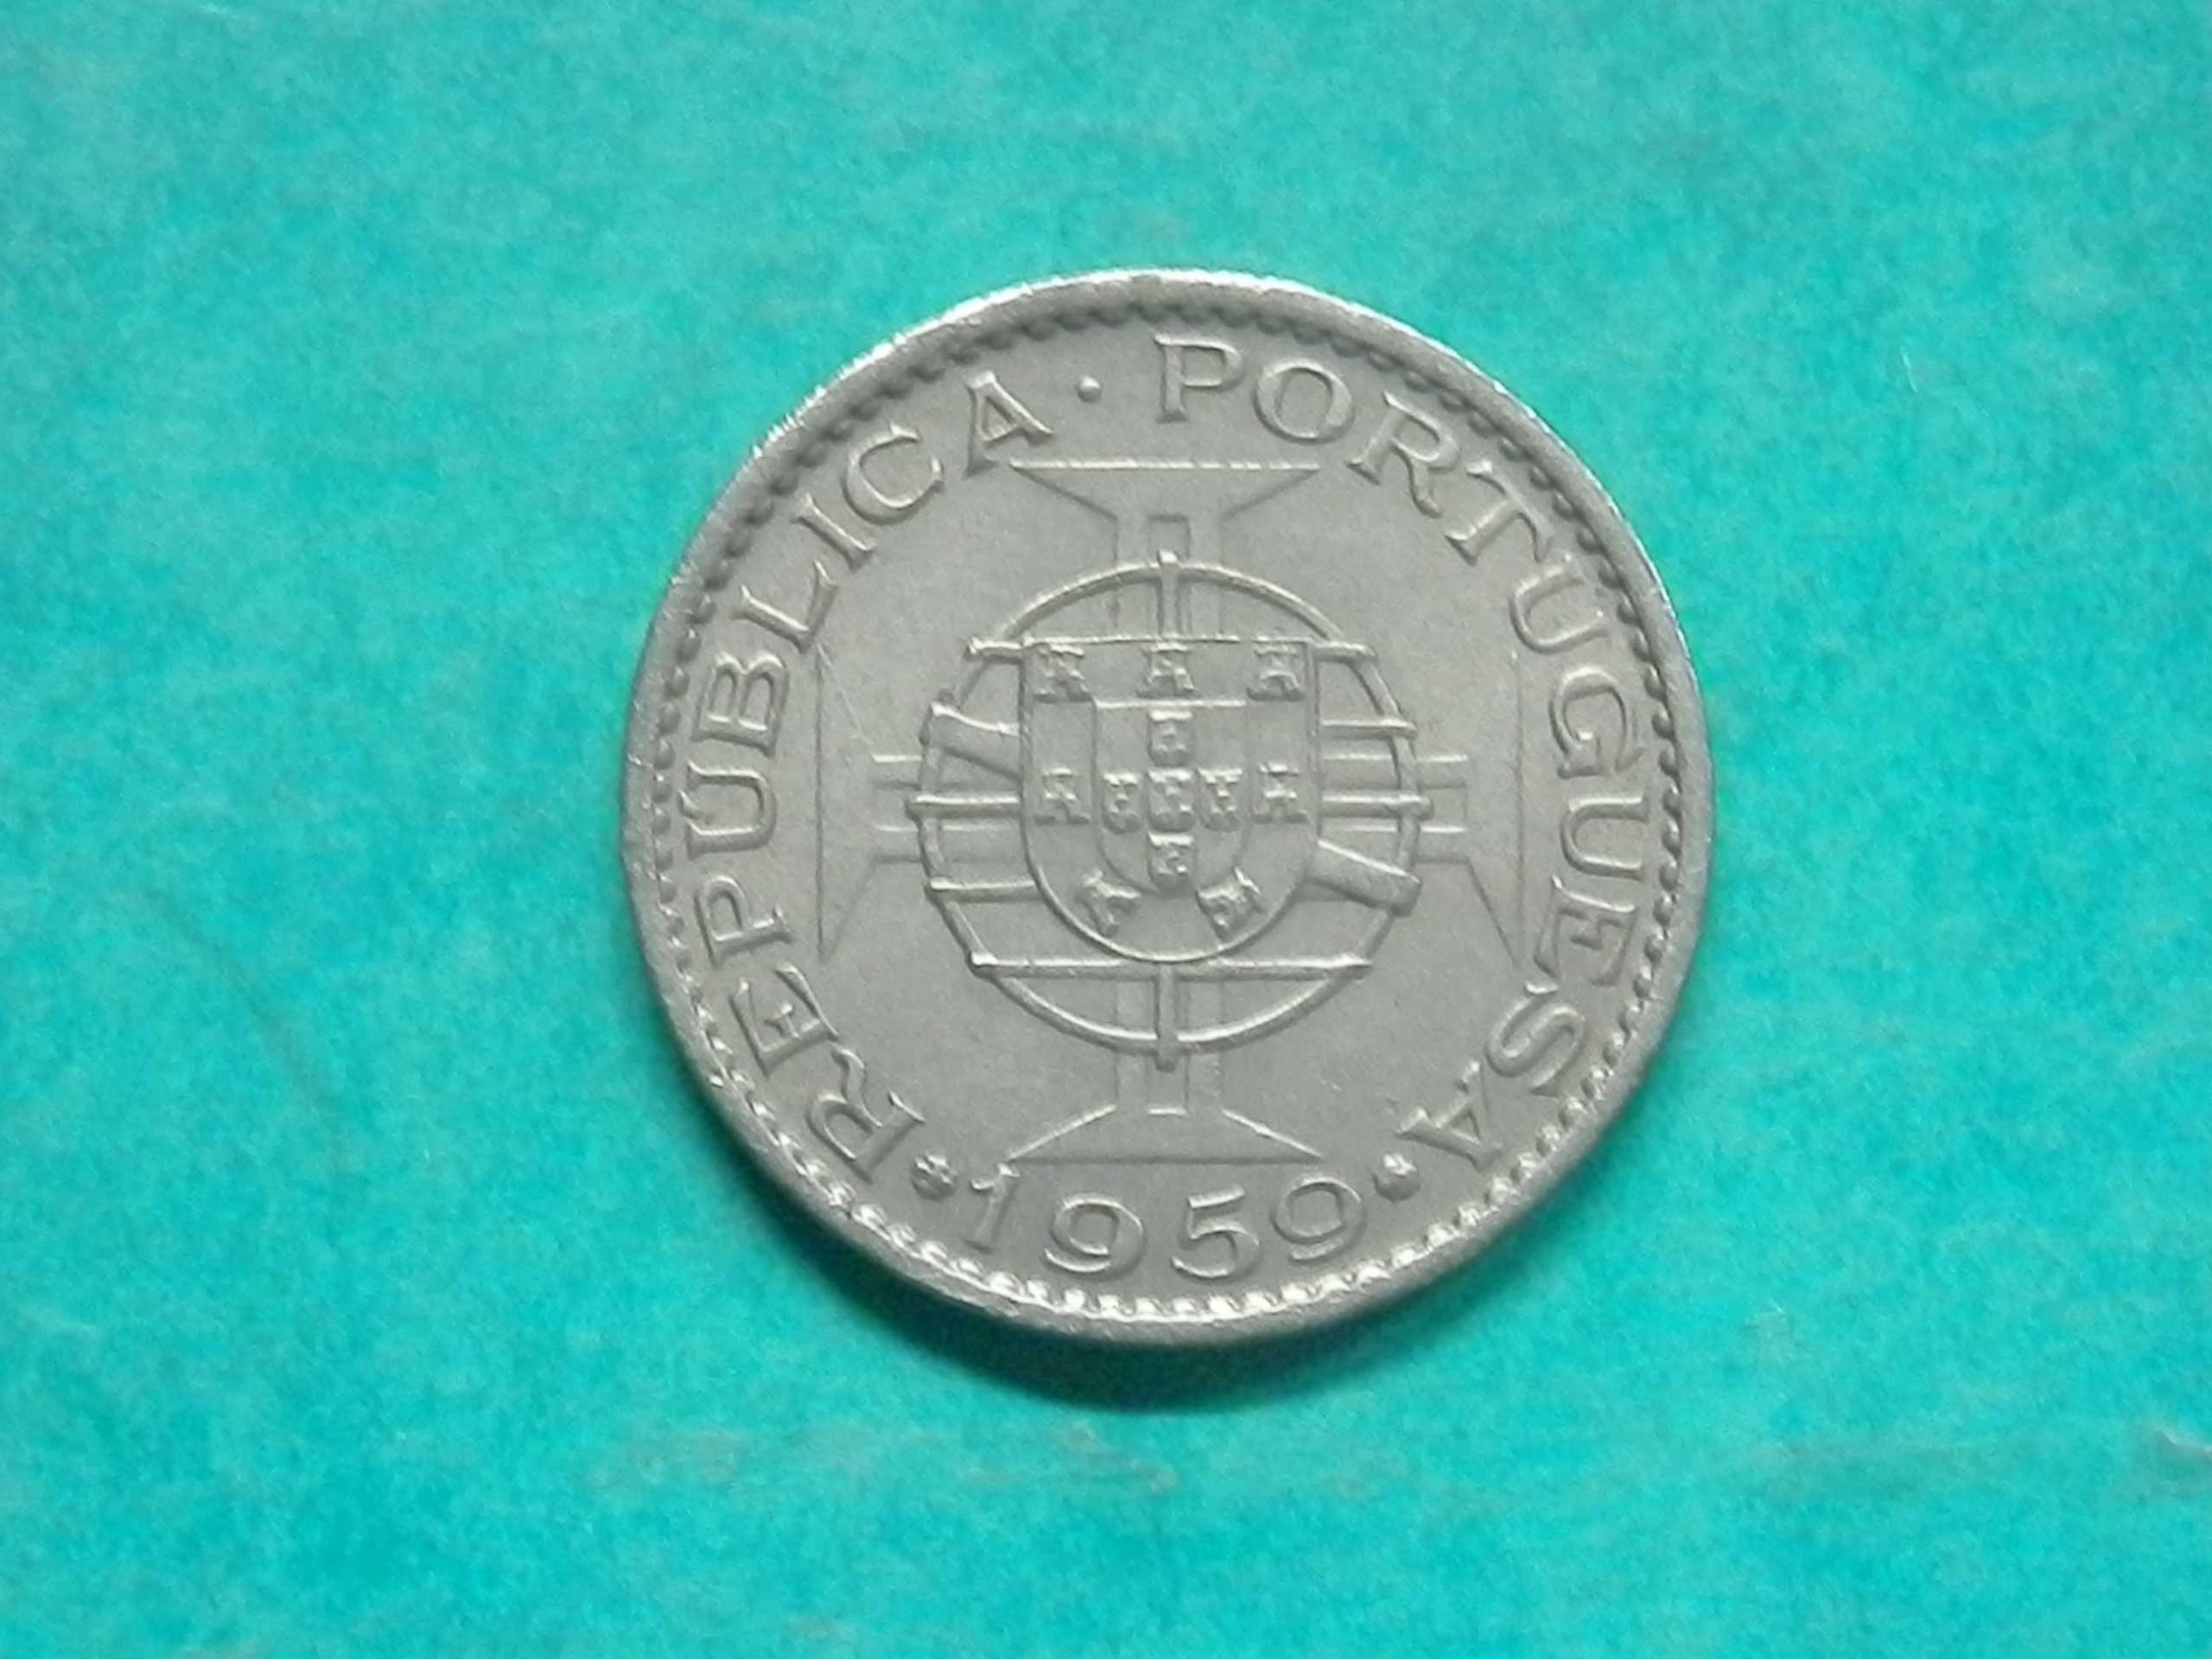 923 - Índia: $60 centavos 1959 alpaca, por 8,00